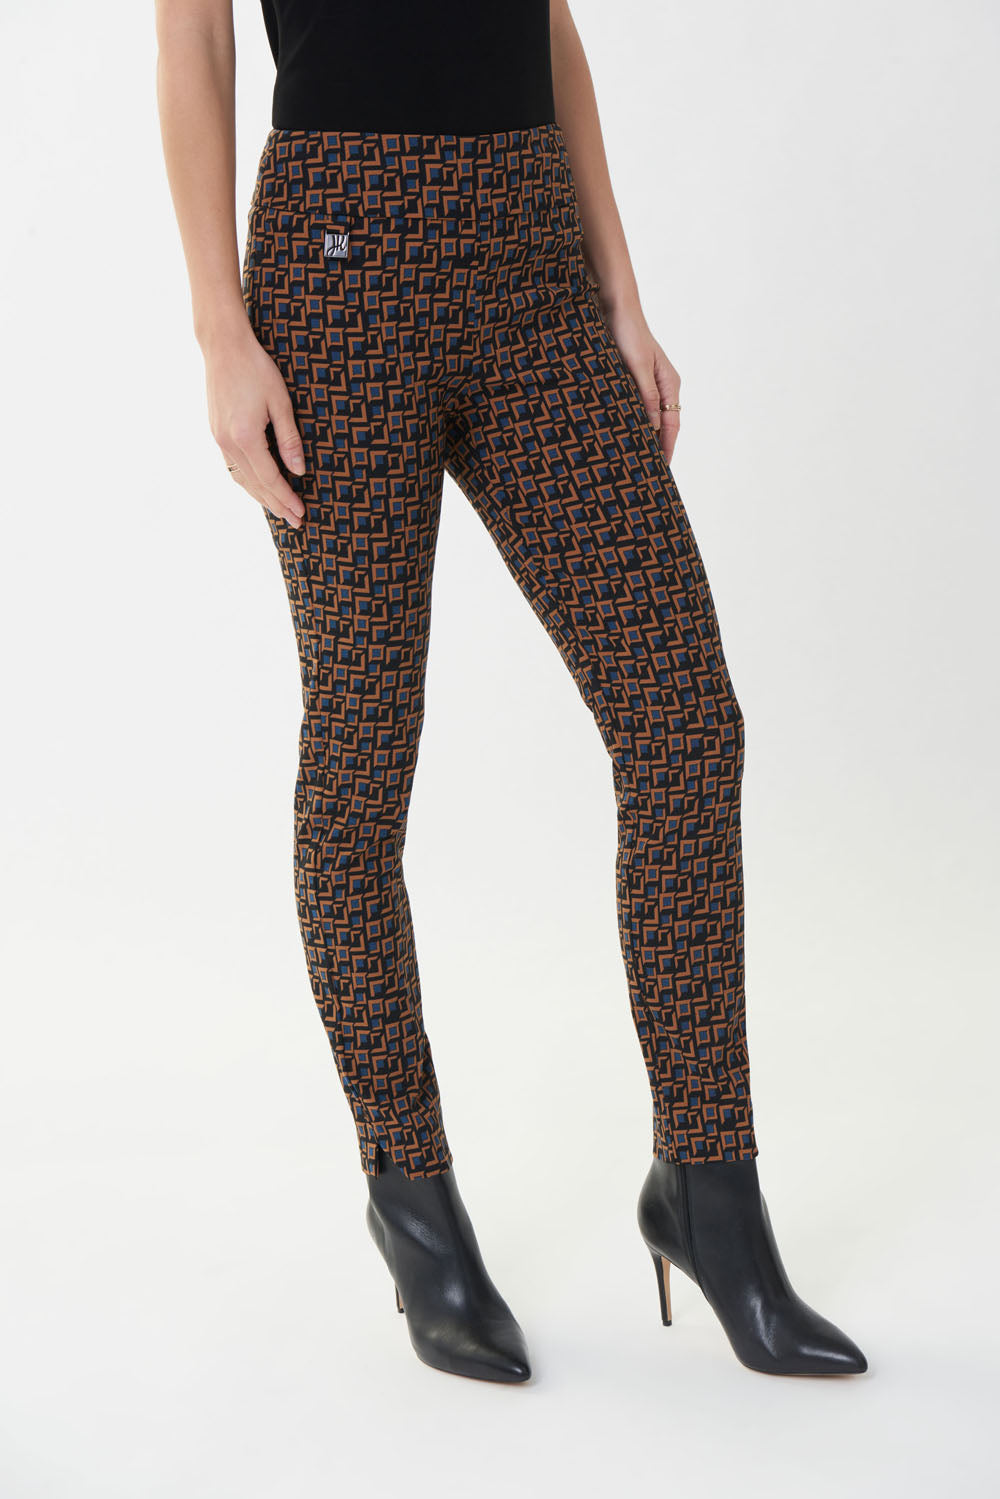 Joseph Ribkoff Black-Multi Geo Print Pants Style 223274